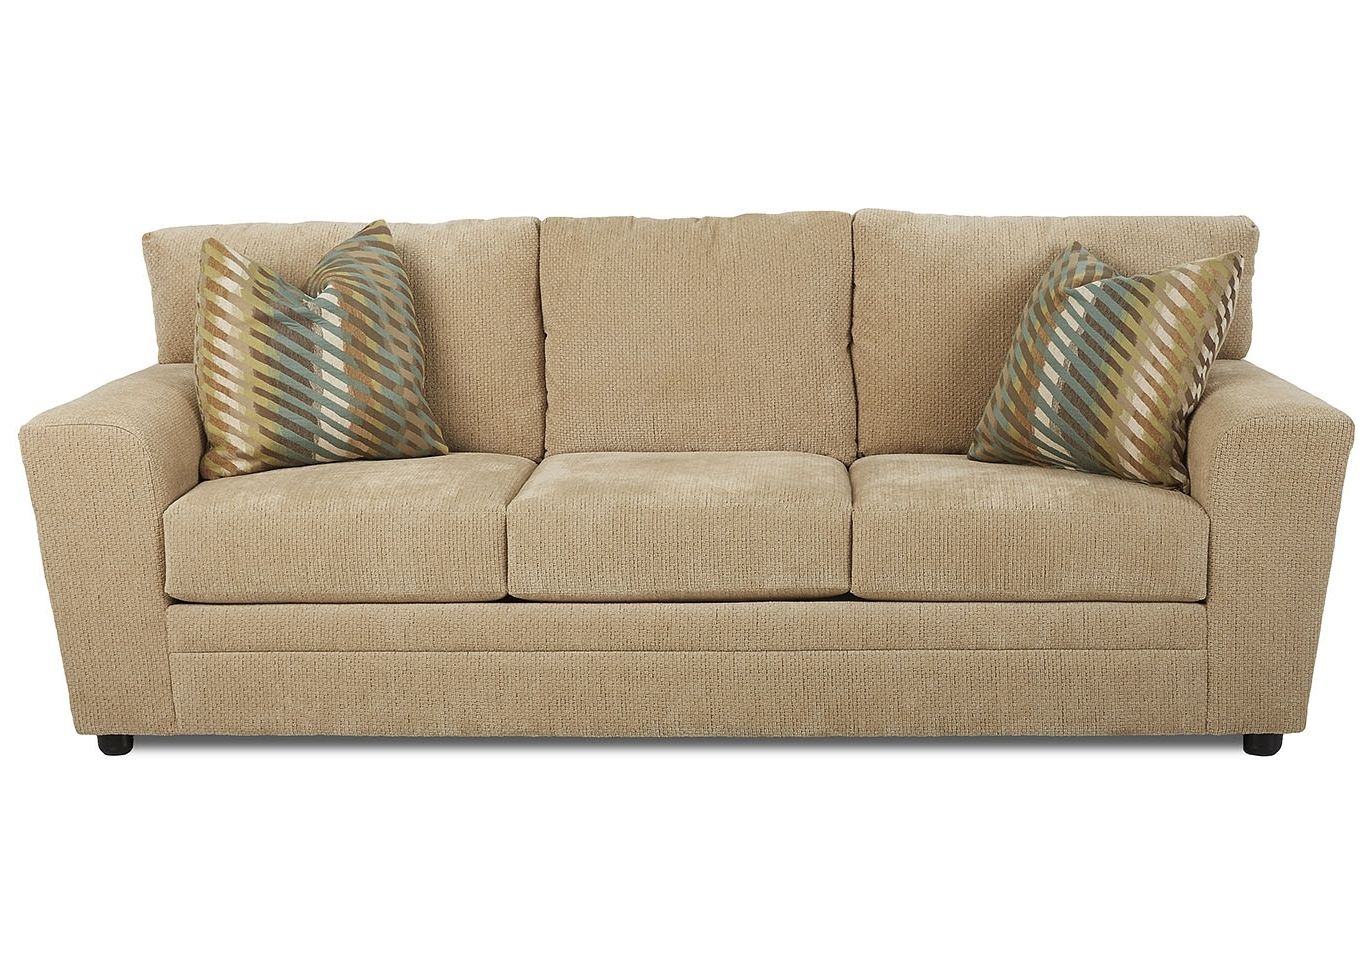 Beacon Furniture – Grand Cayman Ashburn Fabric Sleeper Sofa Within Fashionable Ashburn Cocktail Tables (Gallery 20 of 20)